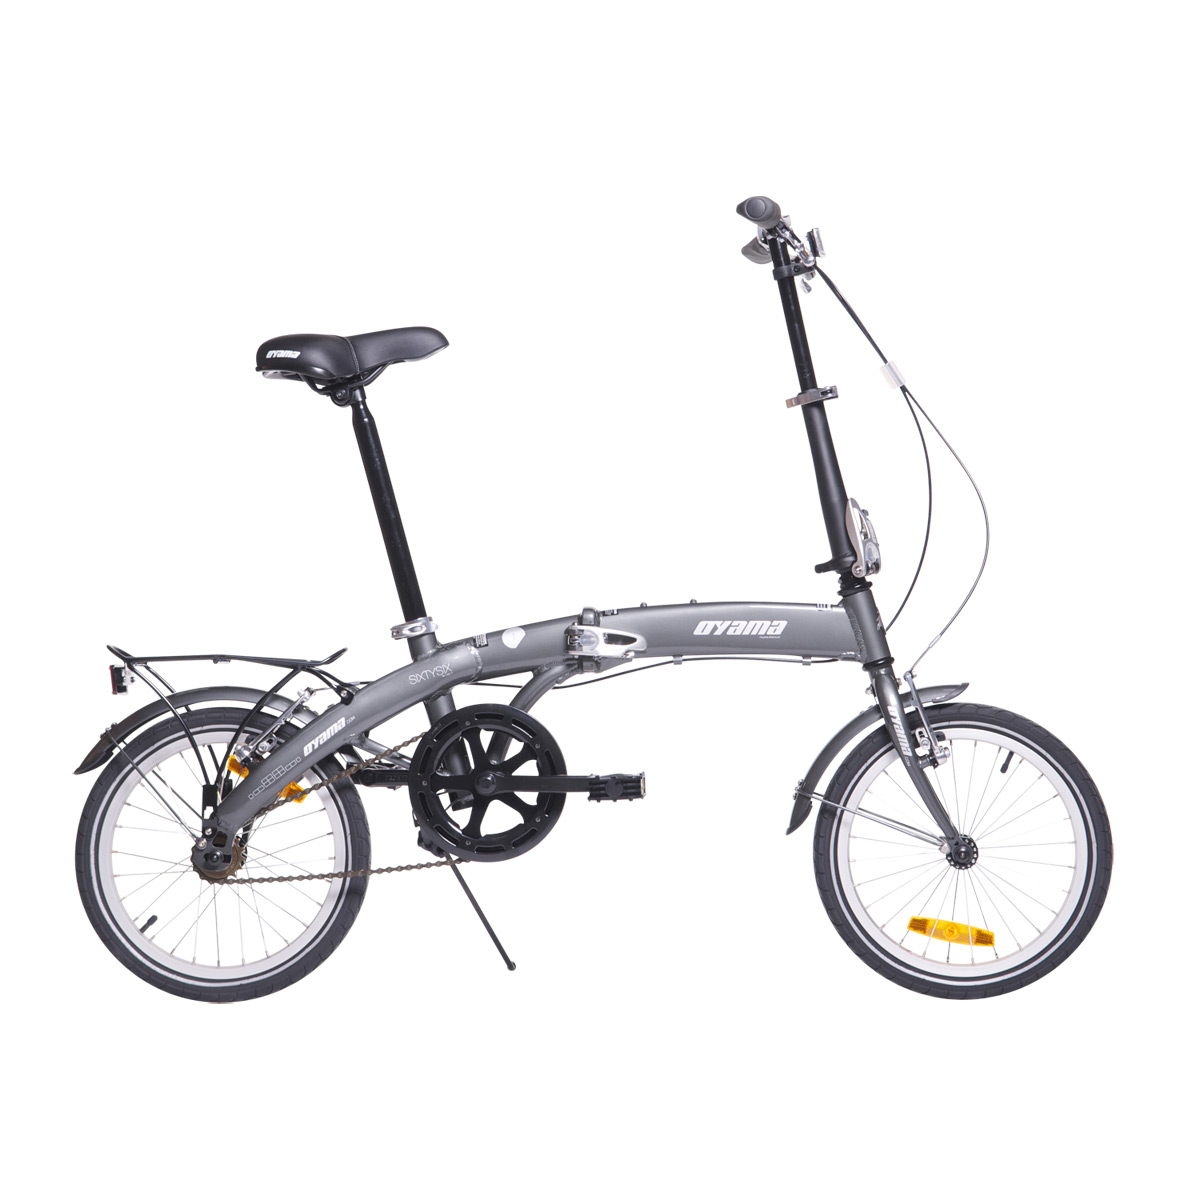 Bicicleta plegable modelo "SixtySix" OYAMA bicicleta náuti